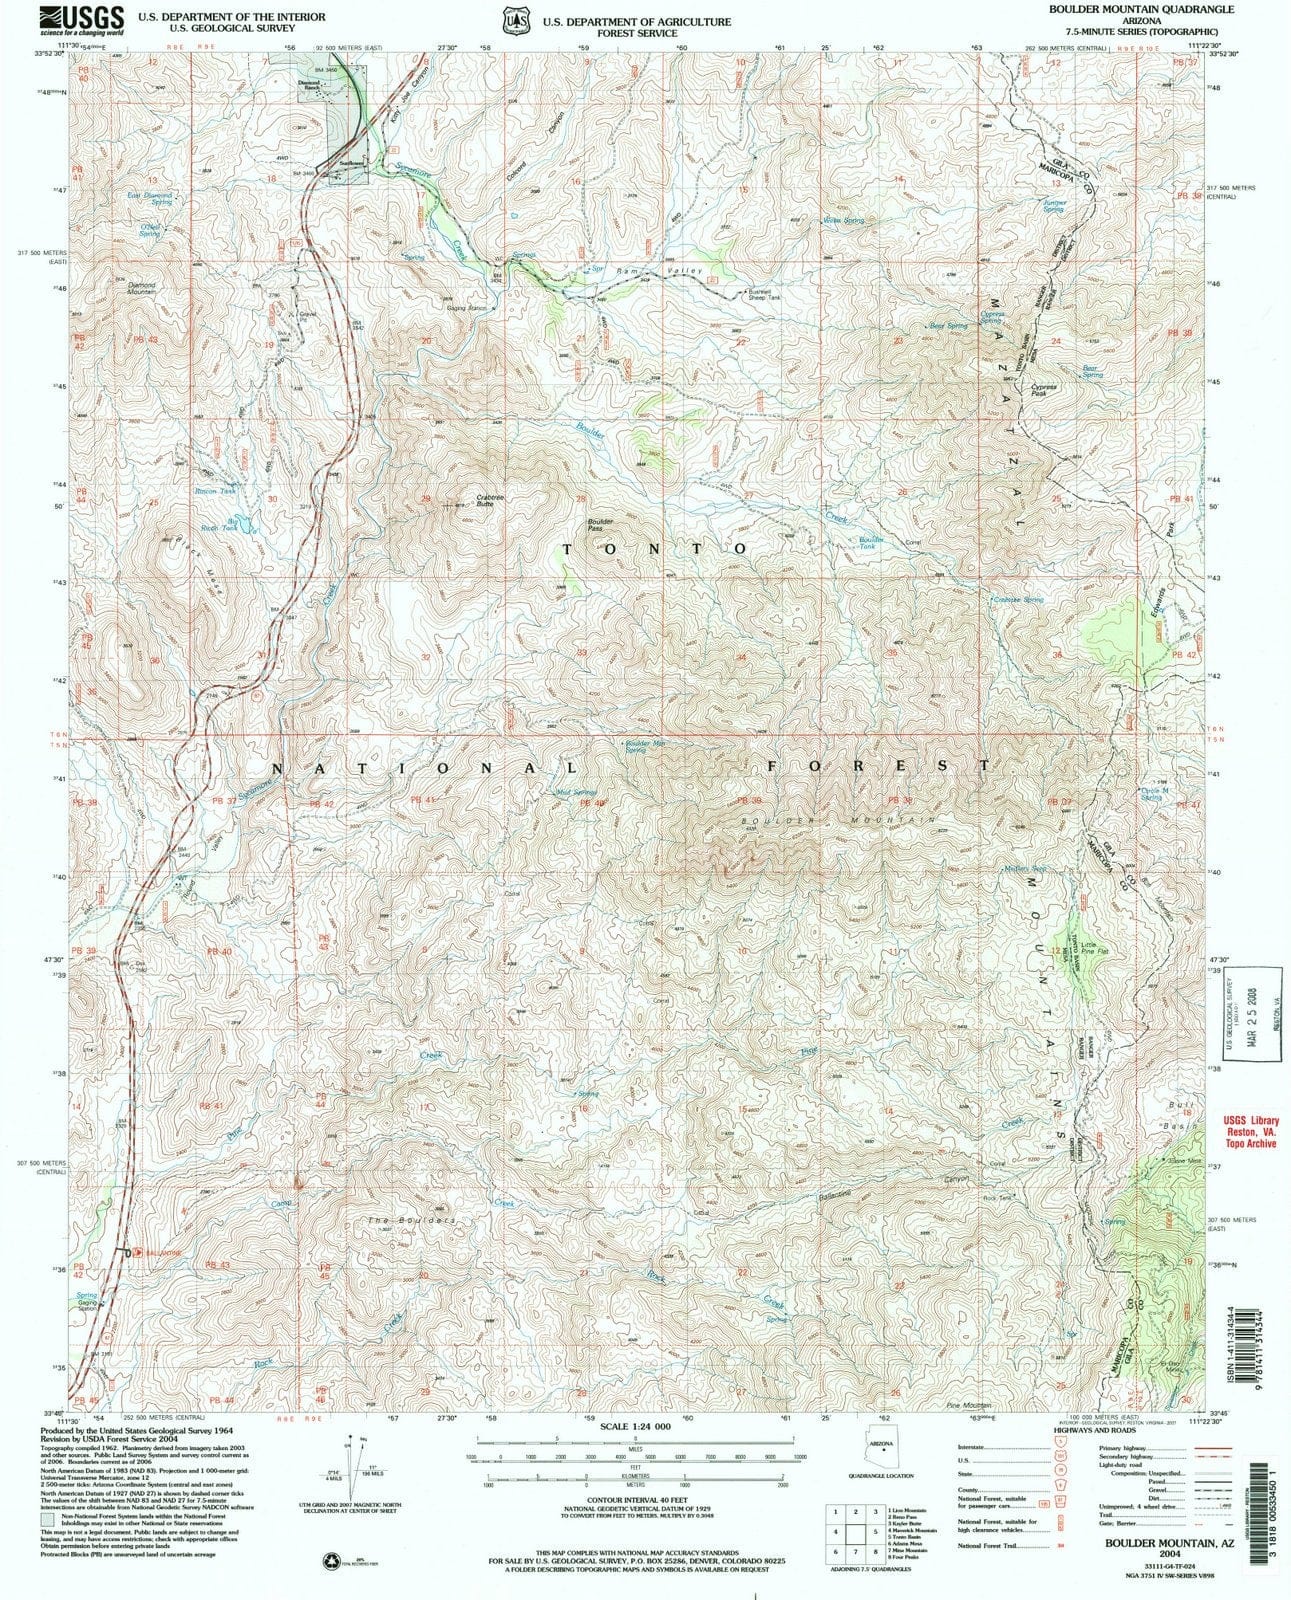 2004 Boulder Mountain, AZ - Arizona - USGS Topographic Map